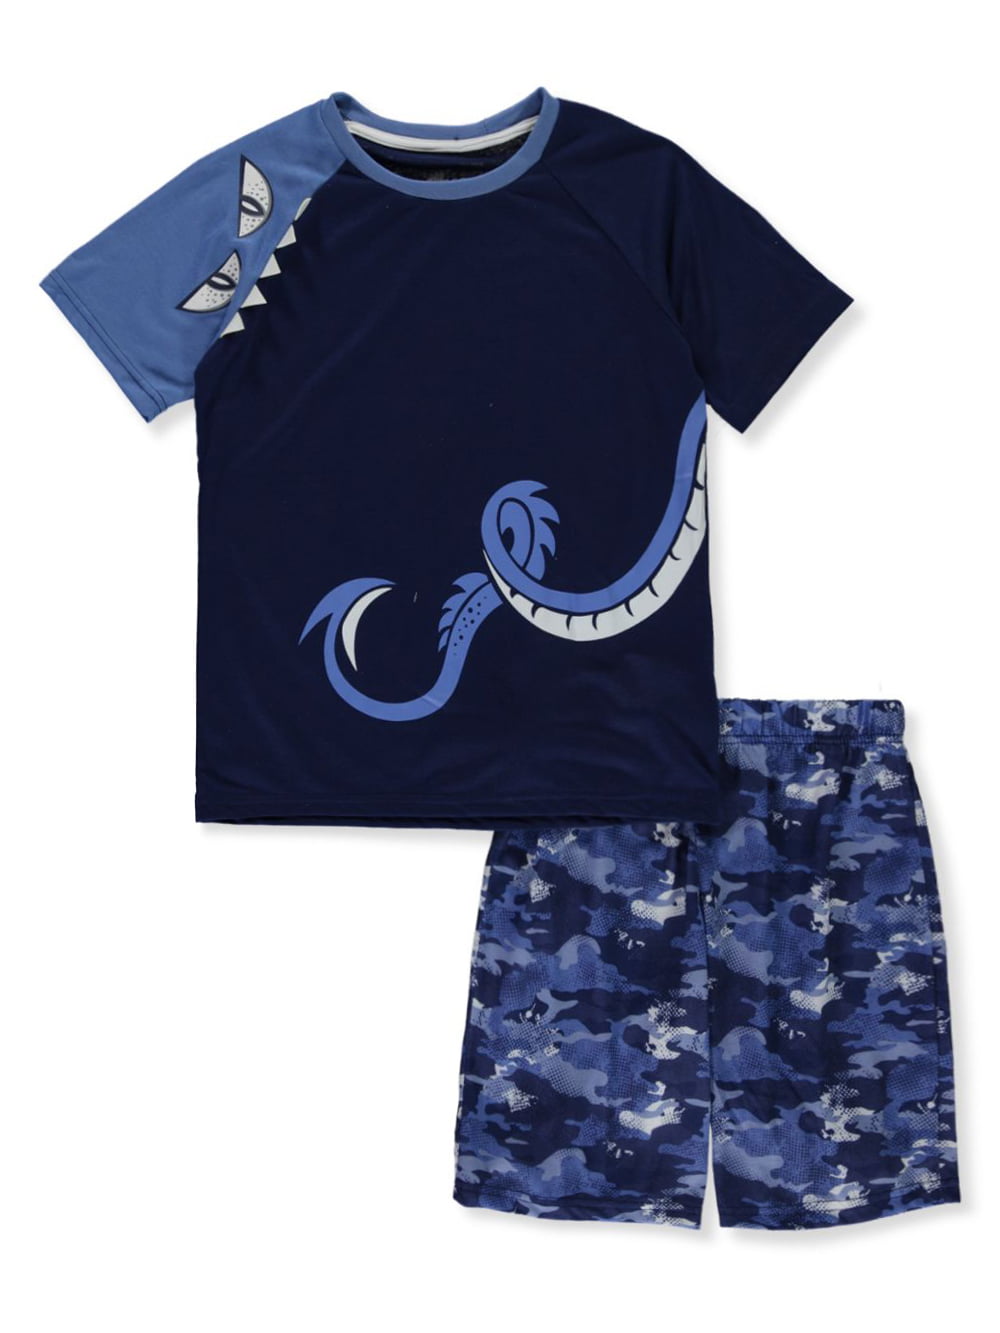 Boys Bedlam Dinosaur Roar Cotton Printed Pyjamas Set Blue Navy Camo 2-6yrs 